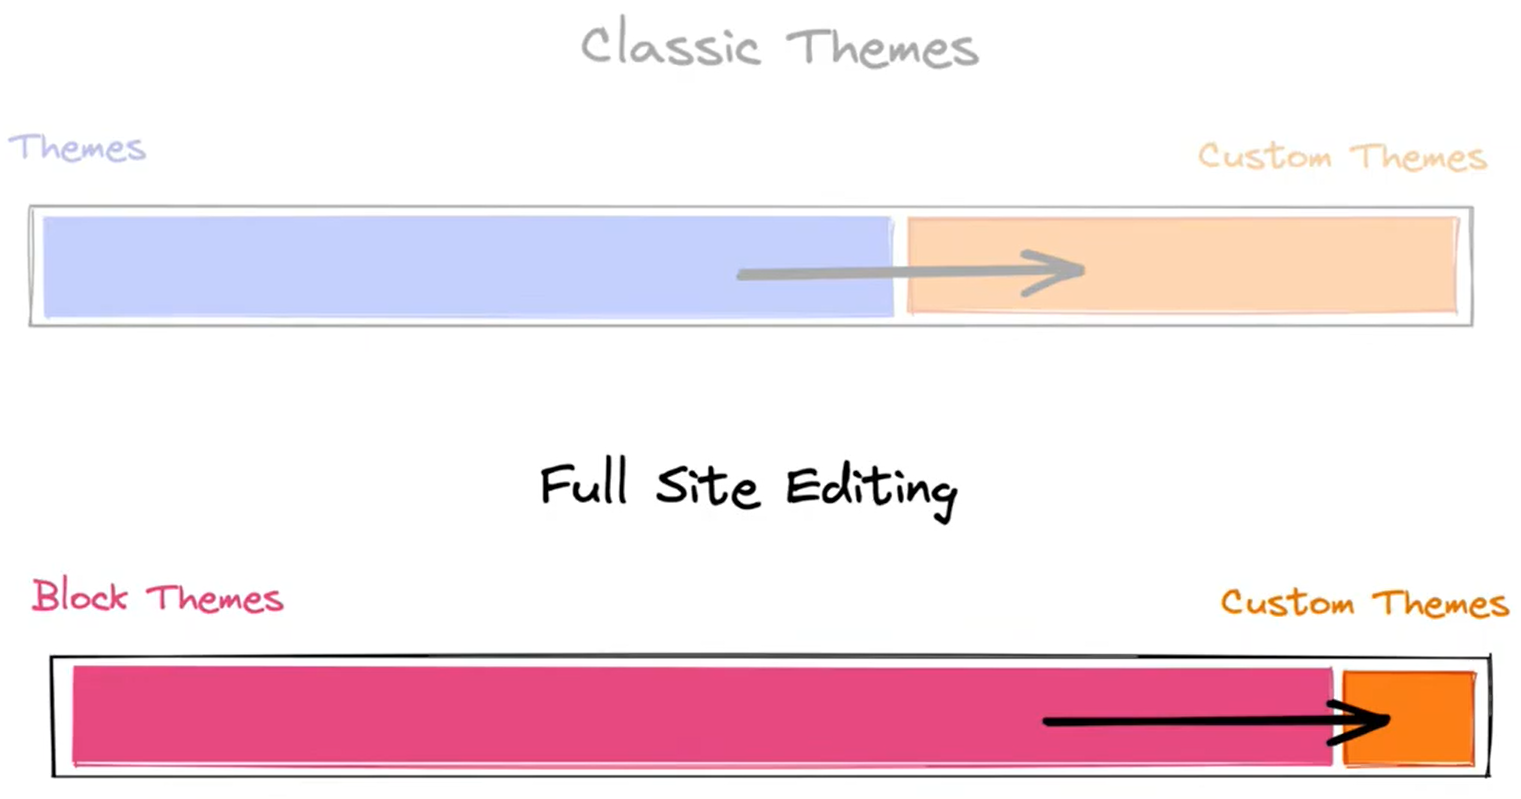 WordPressClassic themes vs Full Site Editing diagram